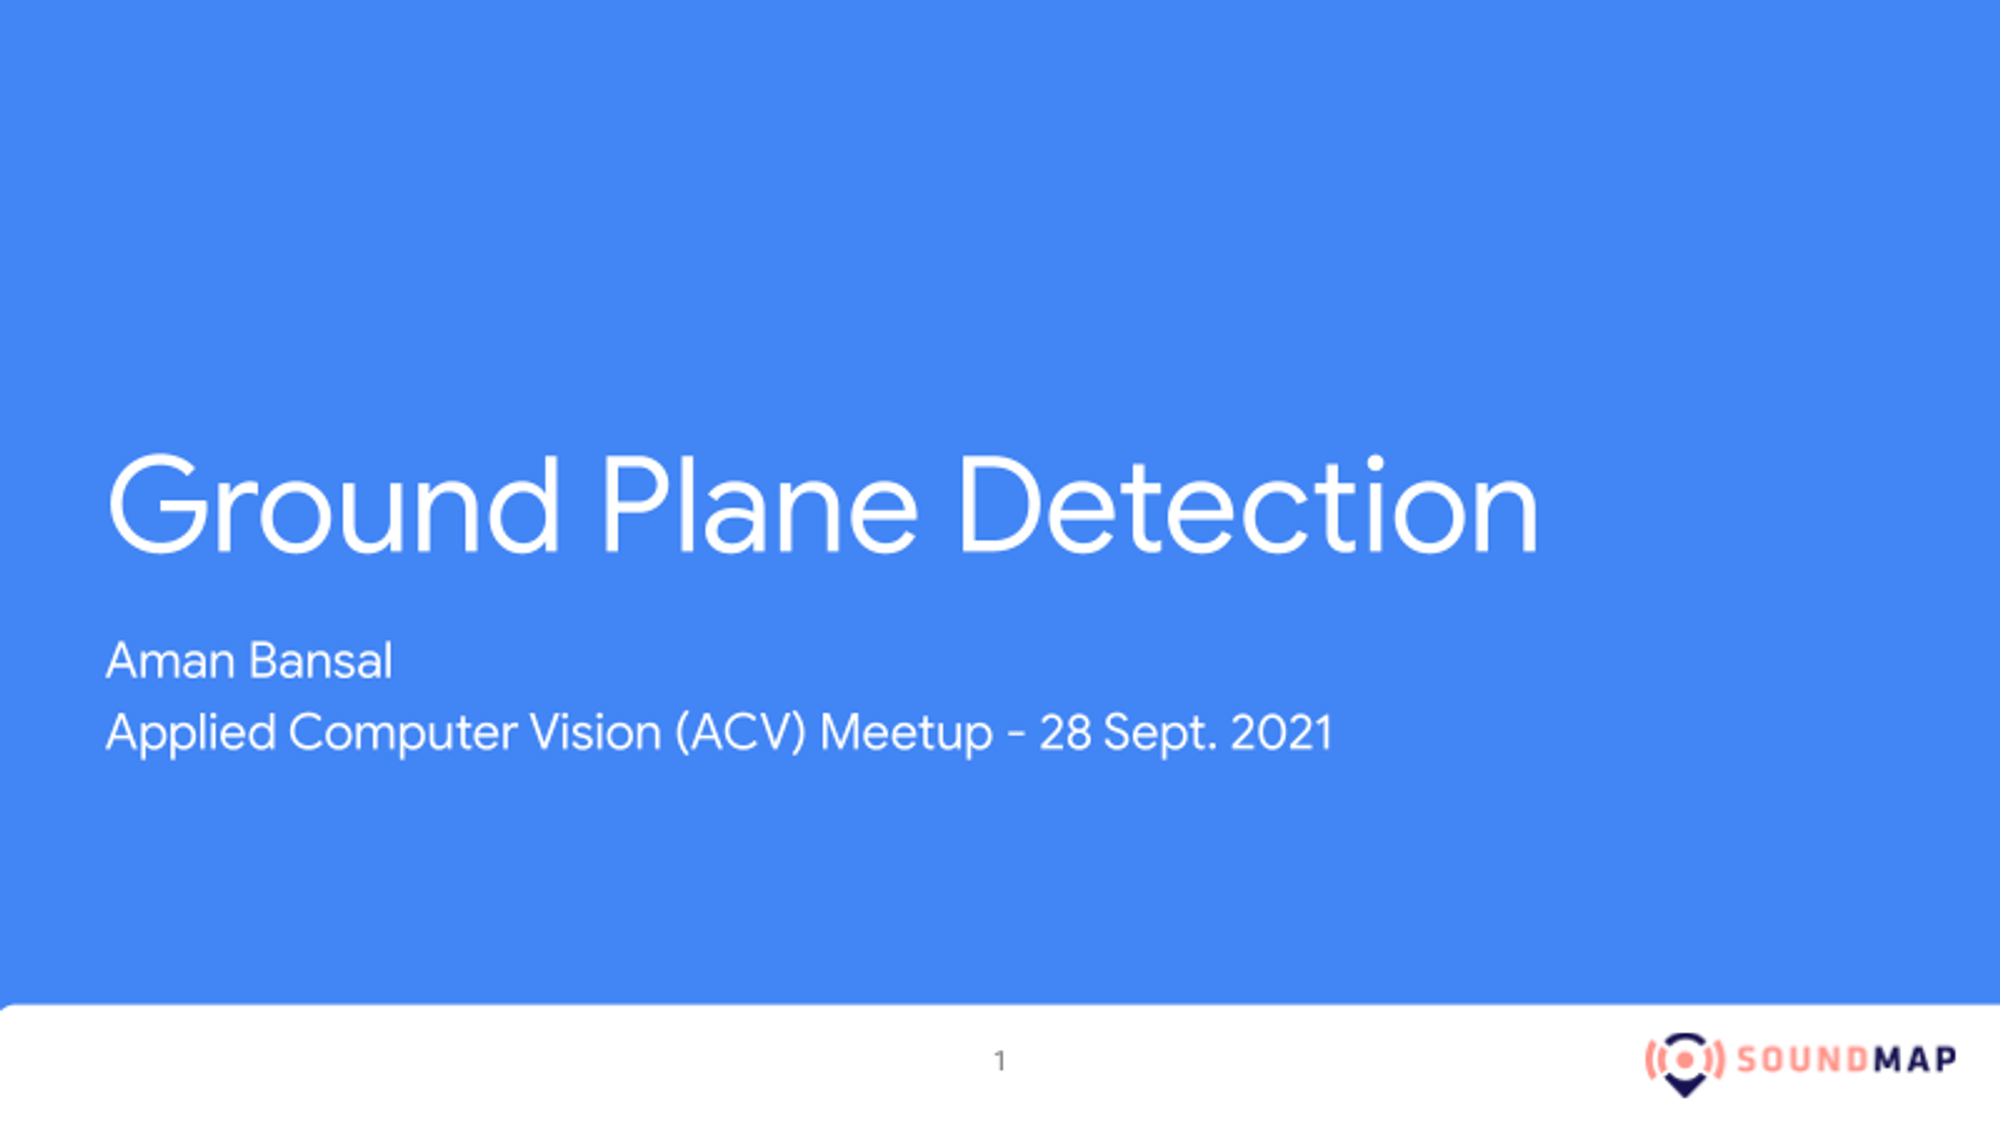 ACV Meetup #1 Ground Plane Detection